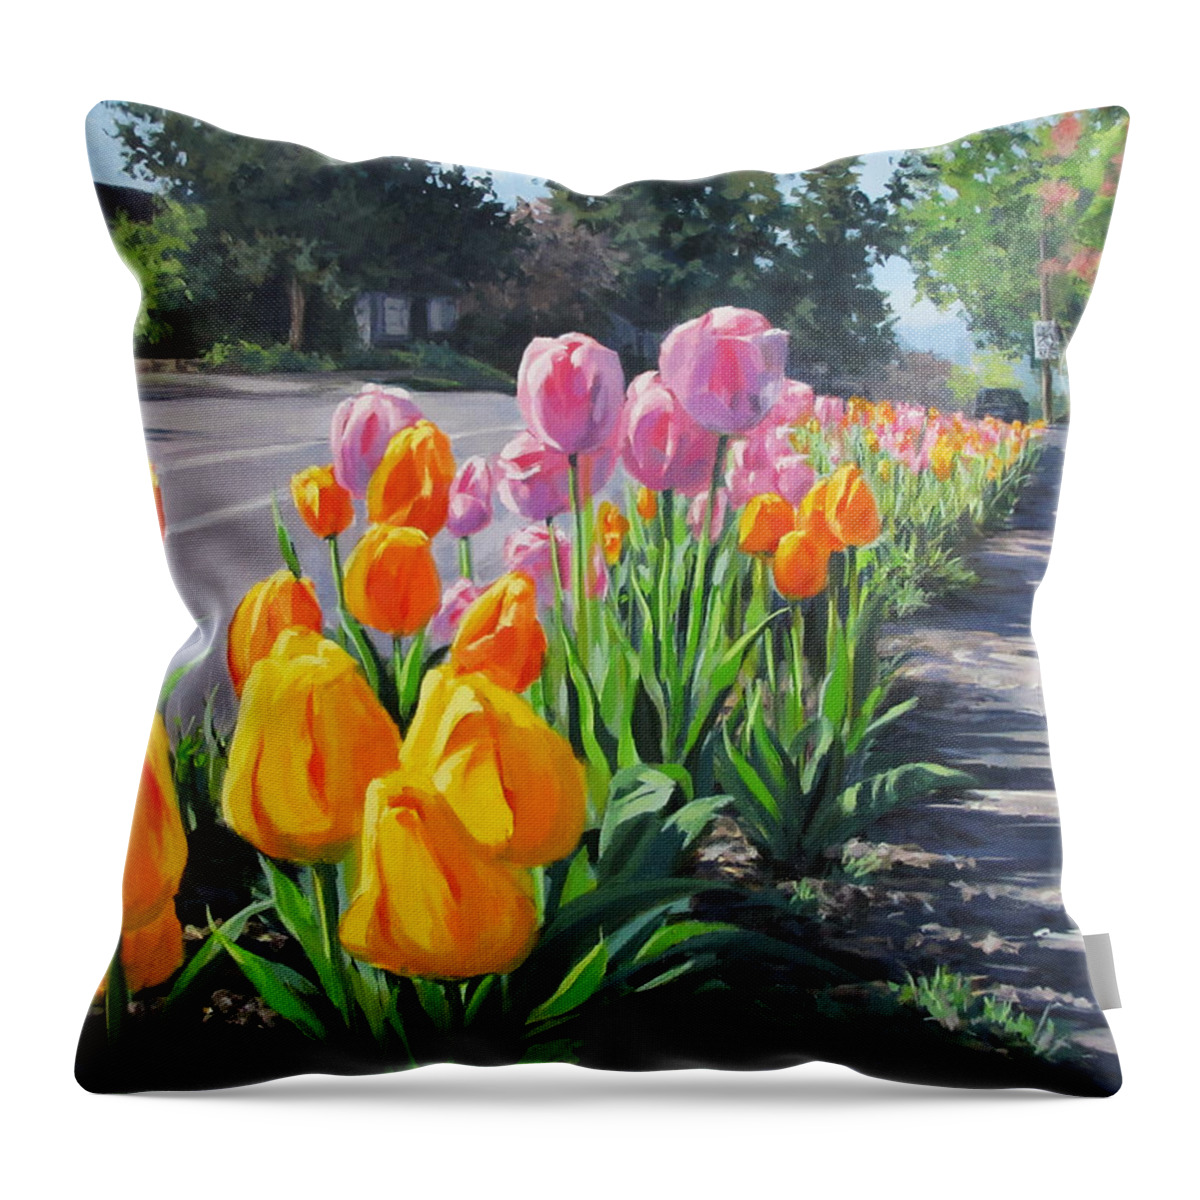 Large Throw Pillow featuring the painting Street Tulips by Karen Ilari